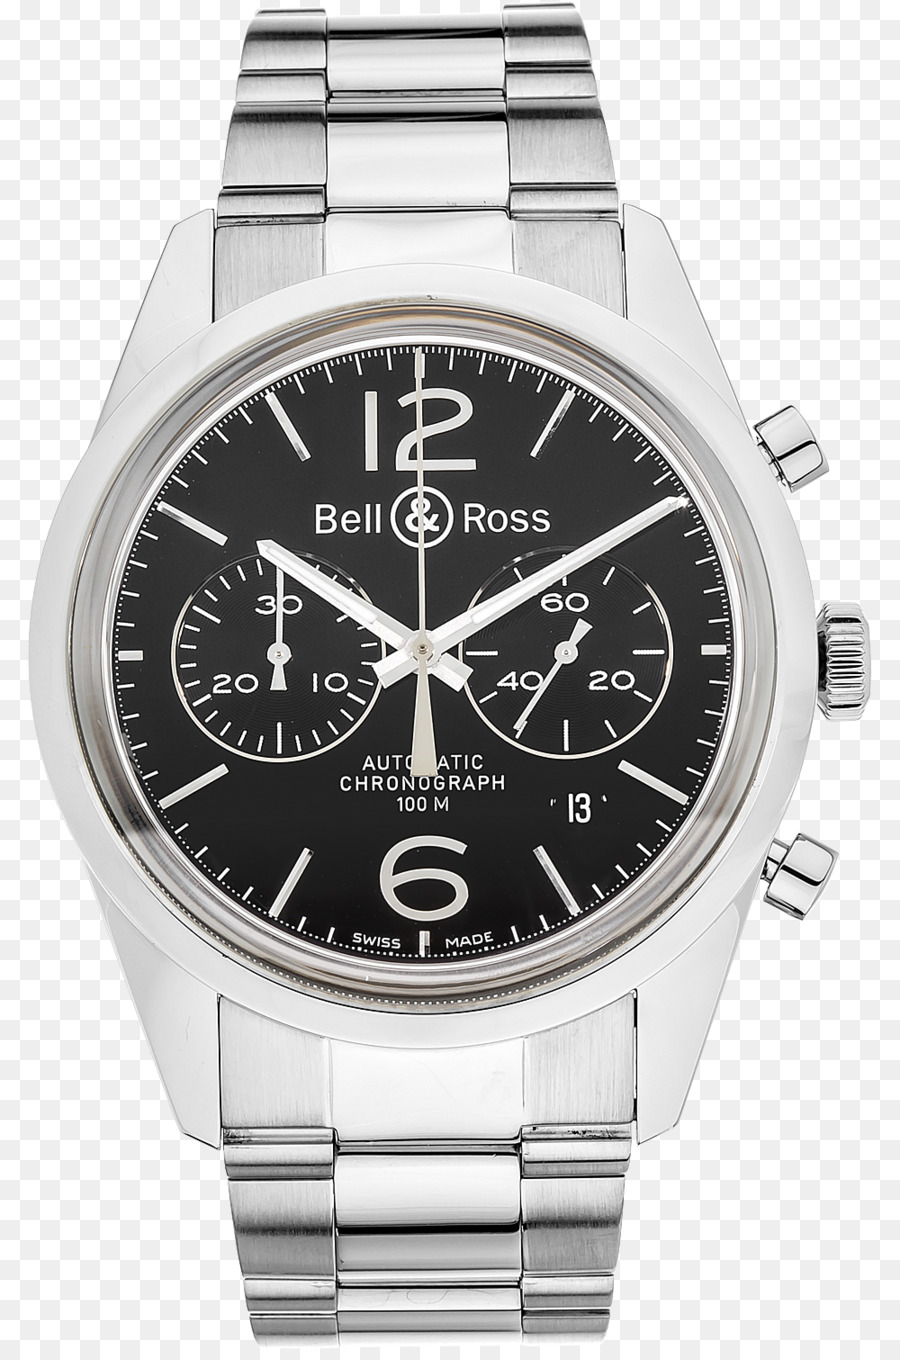 Internationale Uhrenfirma Seiko Hamilton Uhrenfirma Rolex - Uhr